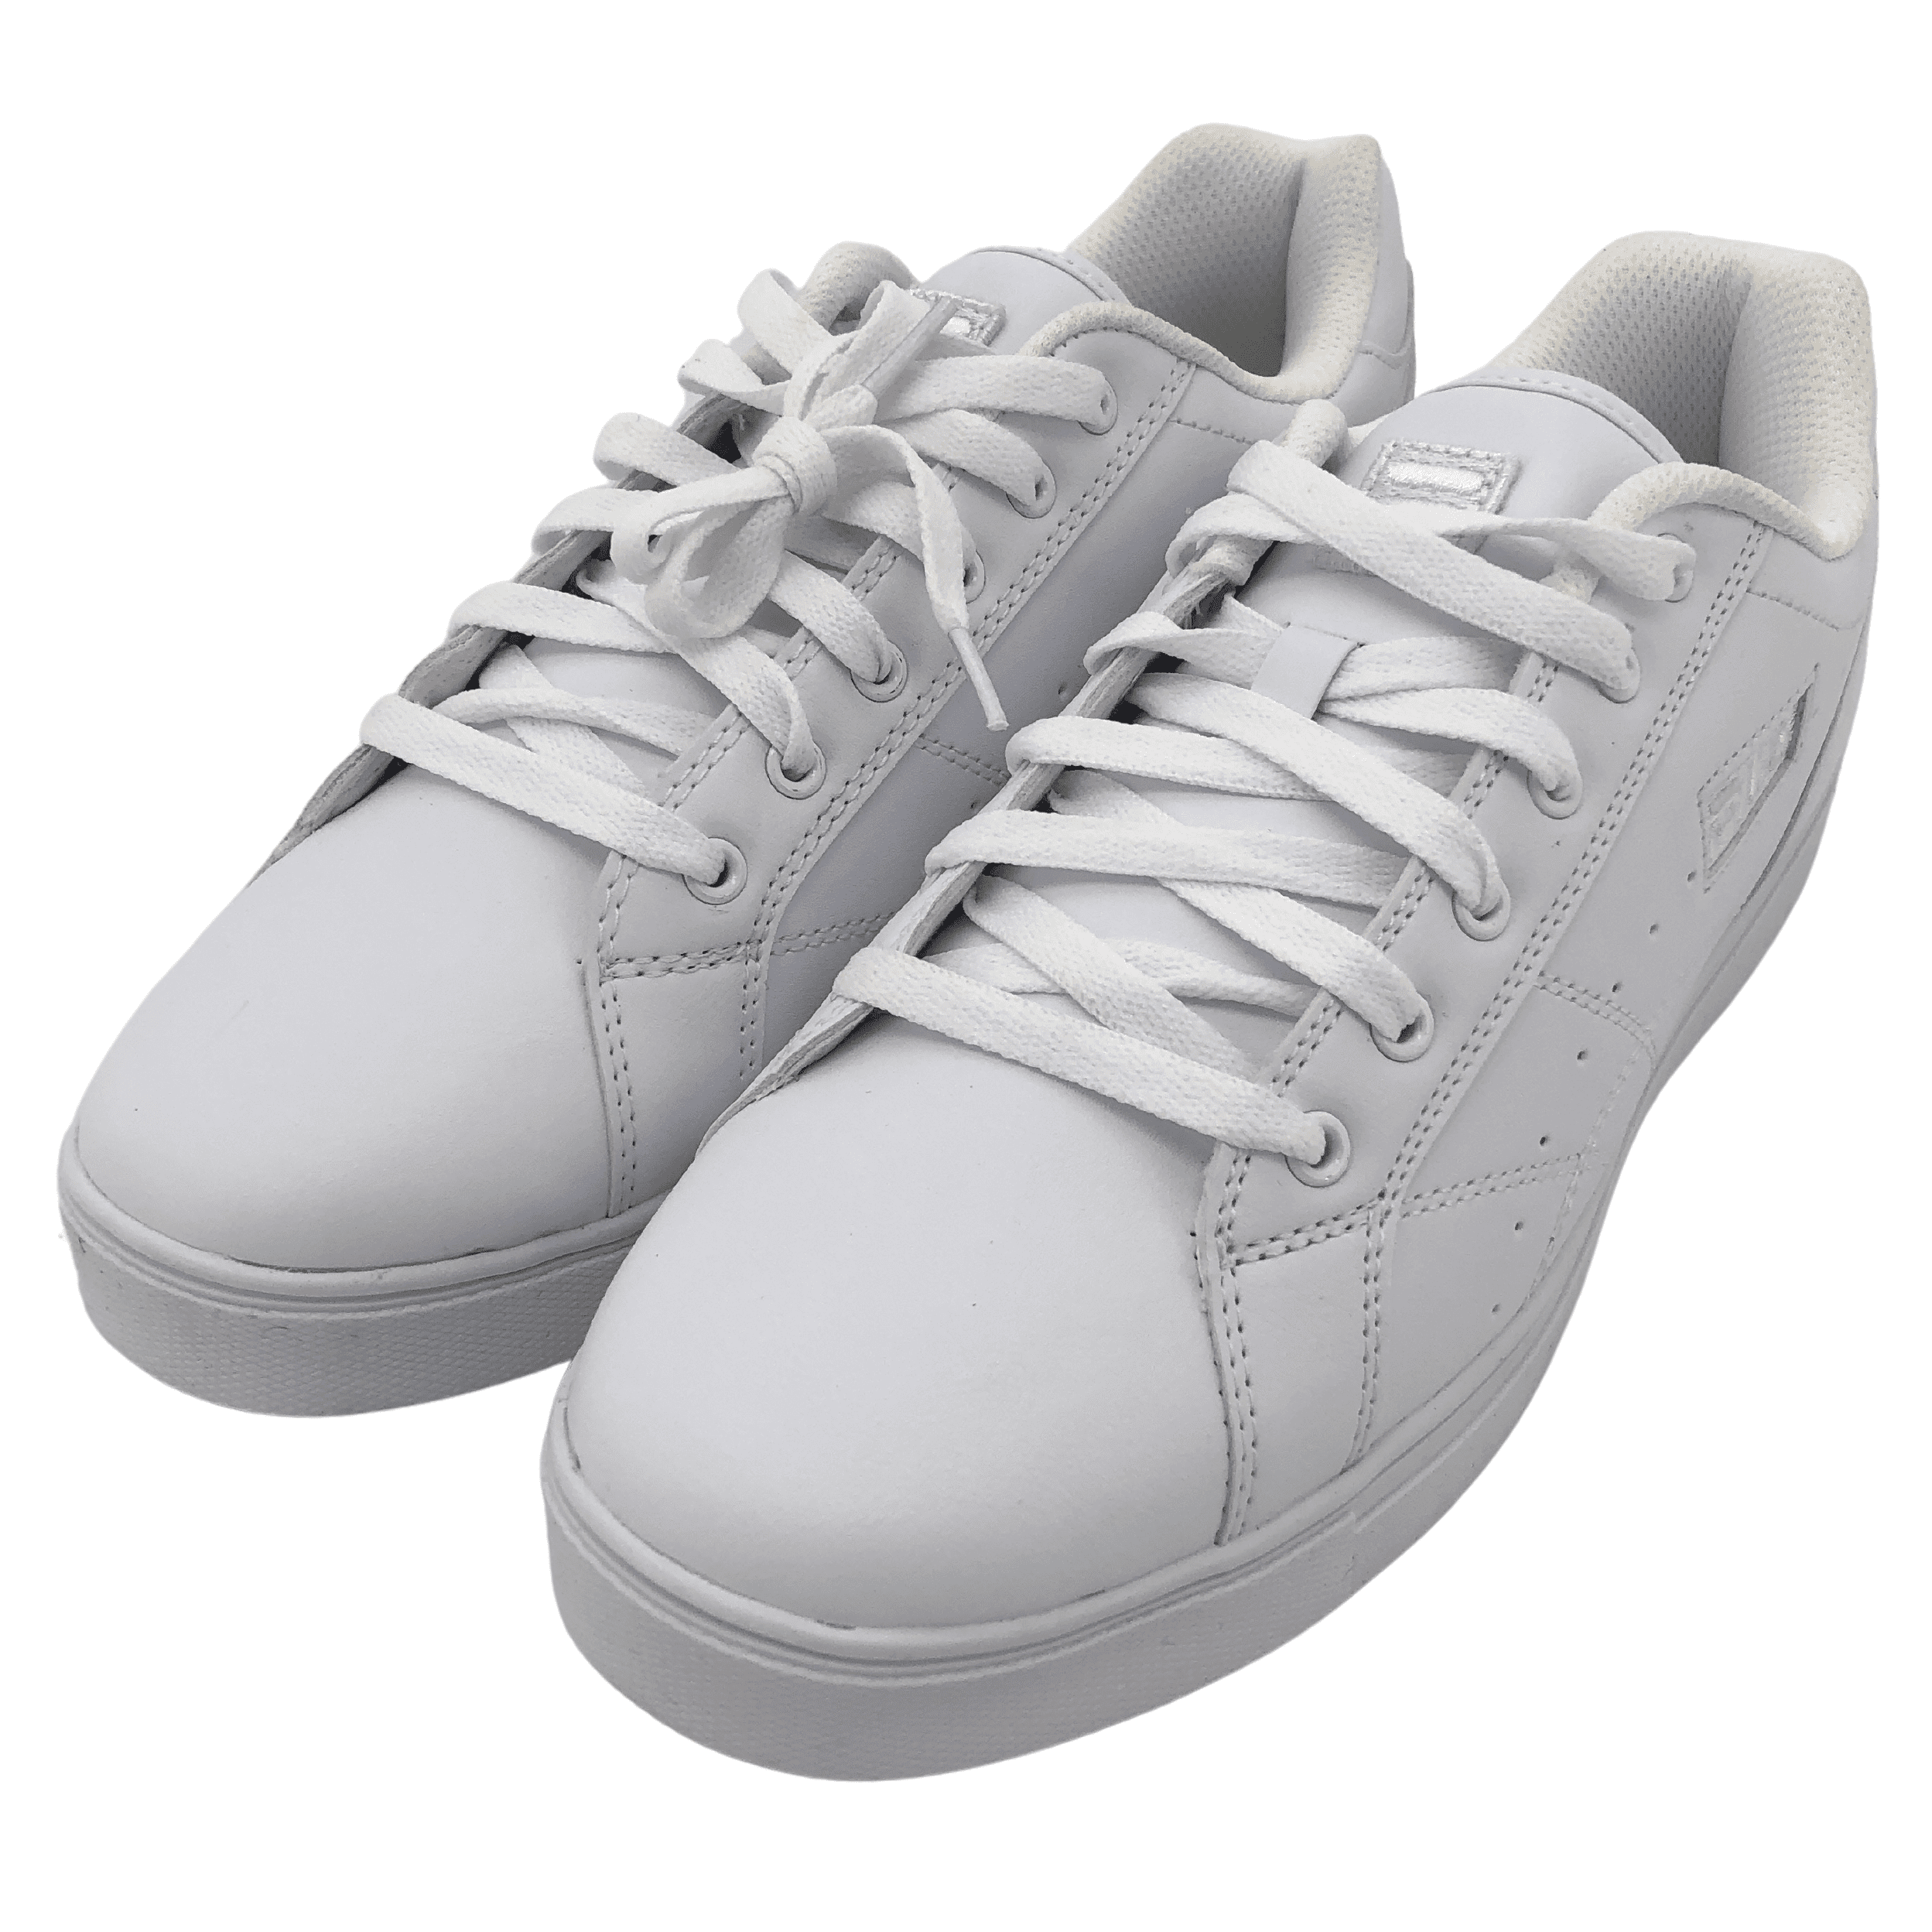 Fila Men's Running Shoe / West Naples Style / White / Size 8